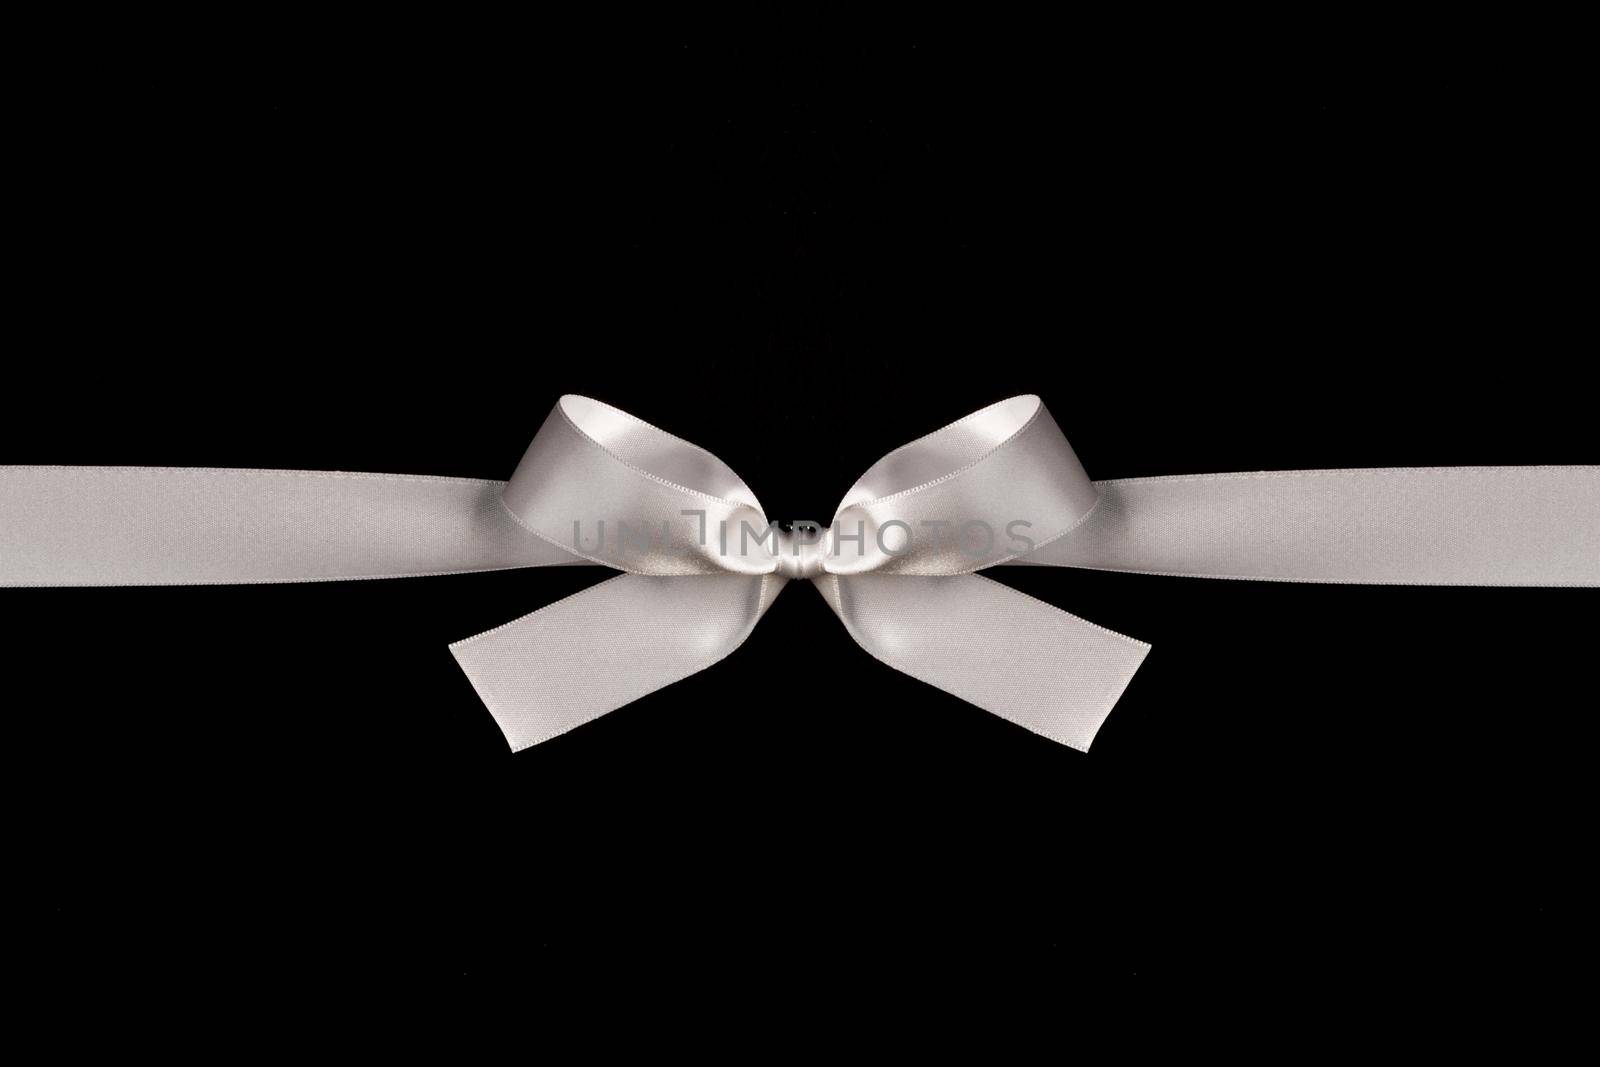 White ribbon bow on black background, black friday holiday gift